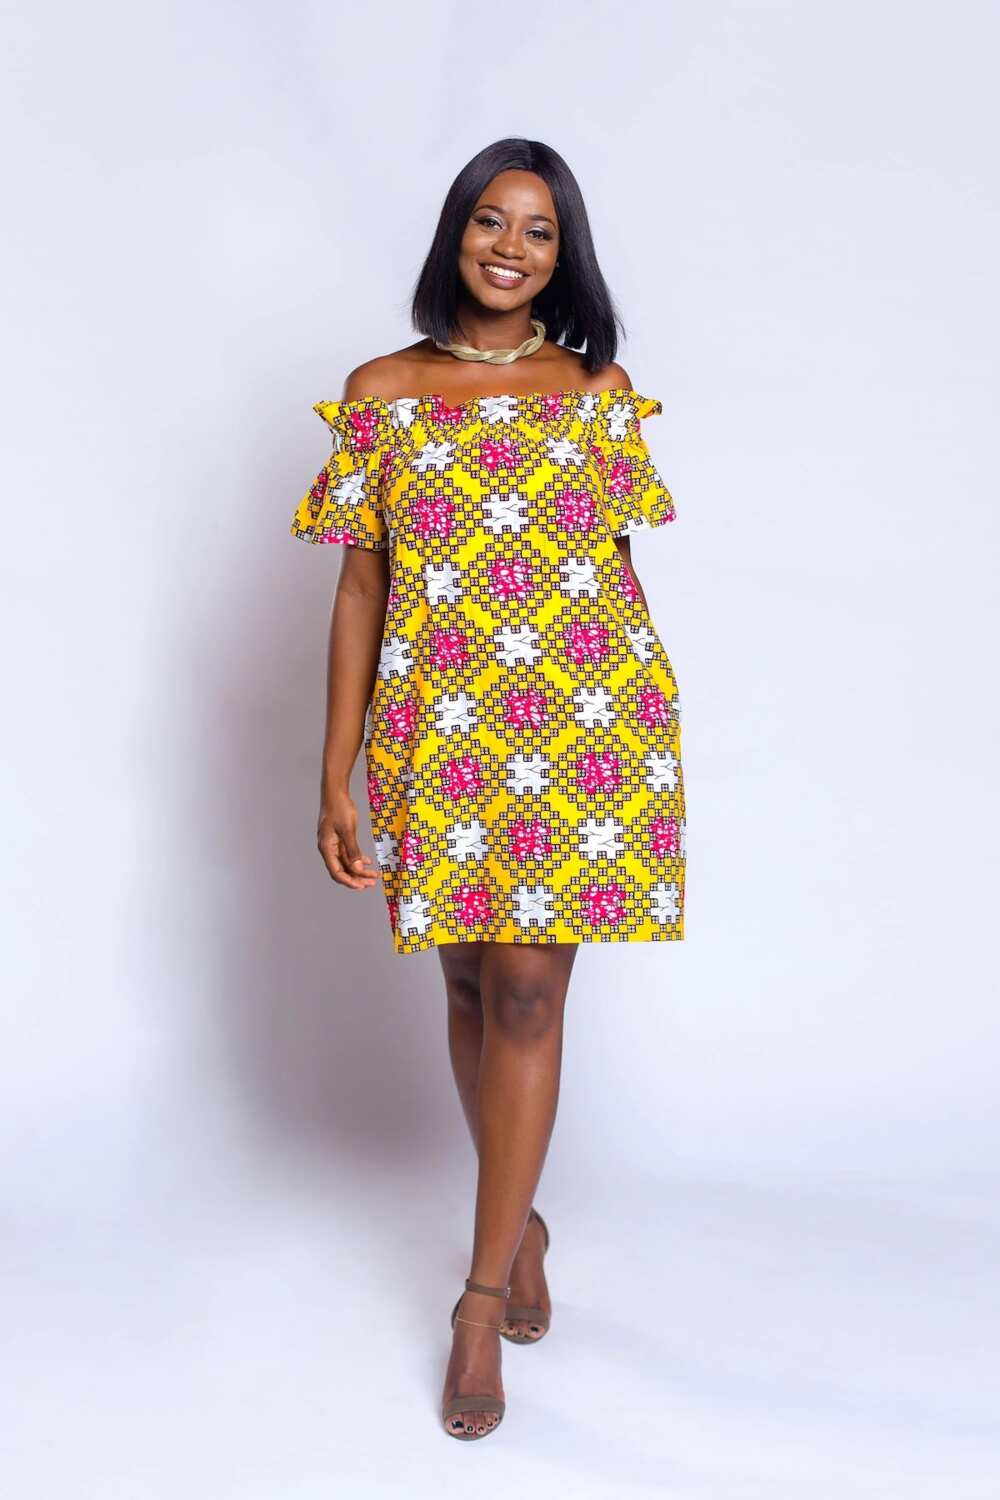 pretty short african dresses, short african print dresses 2018, short african prom dresses